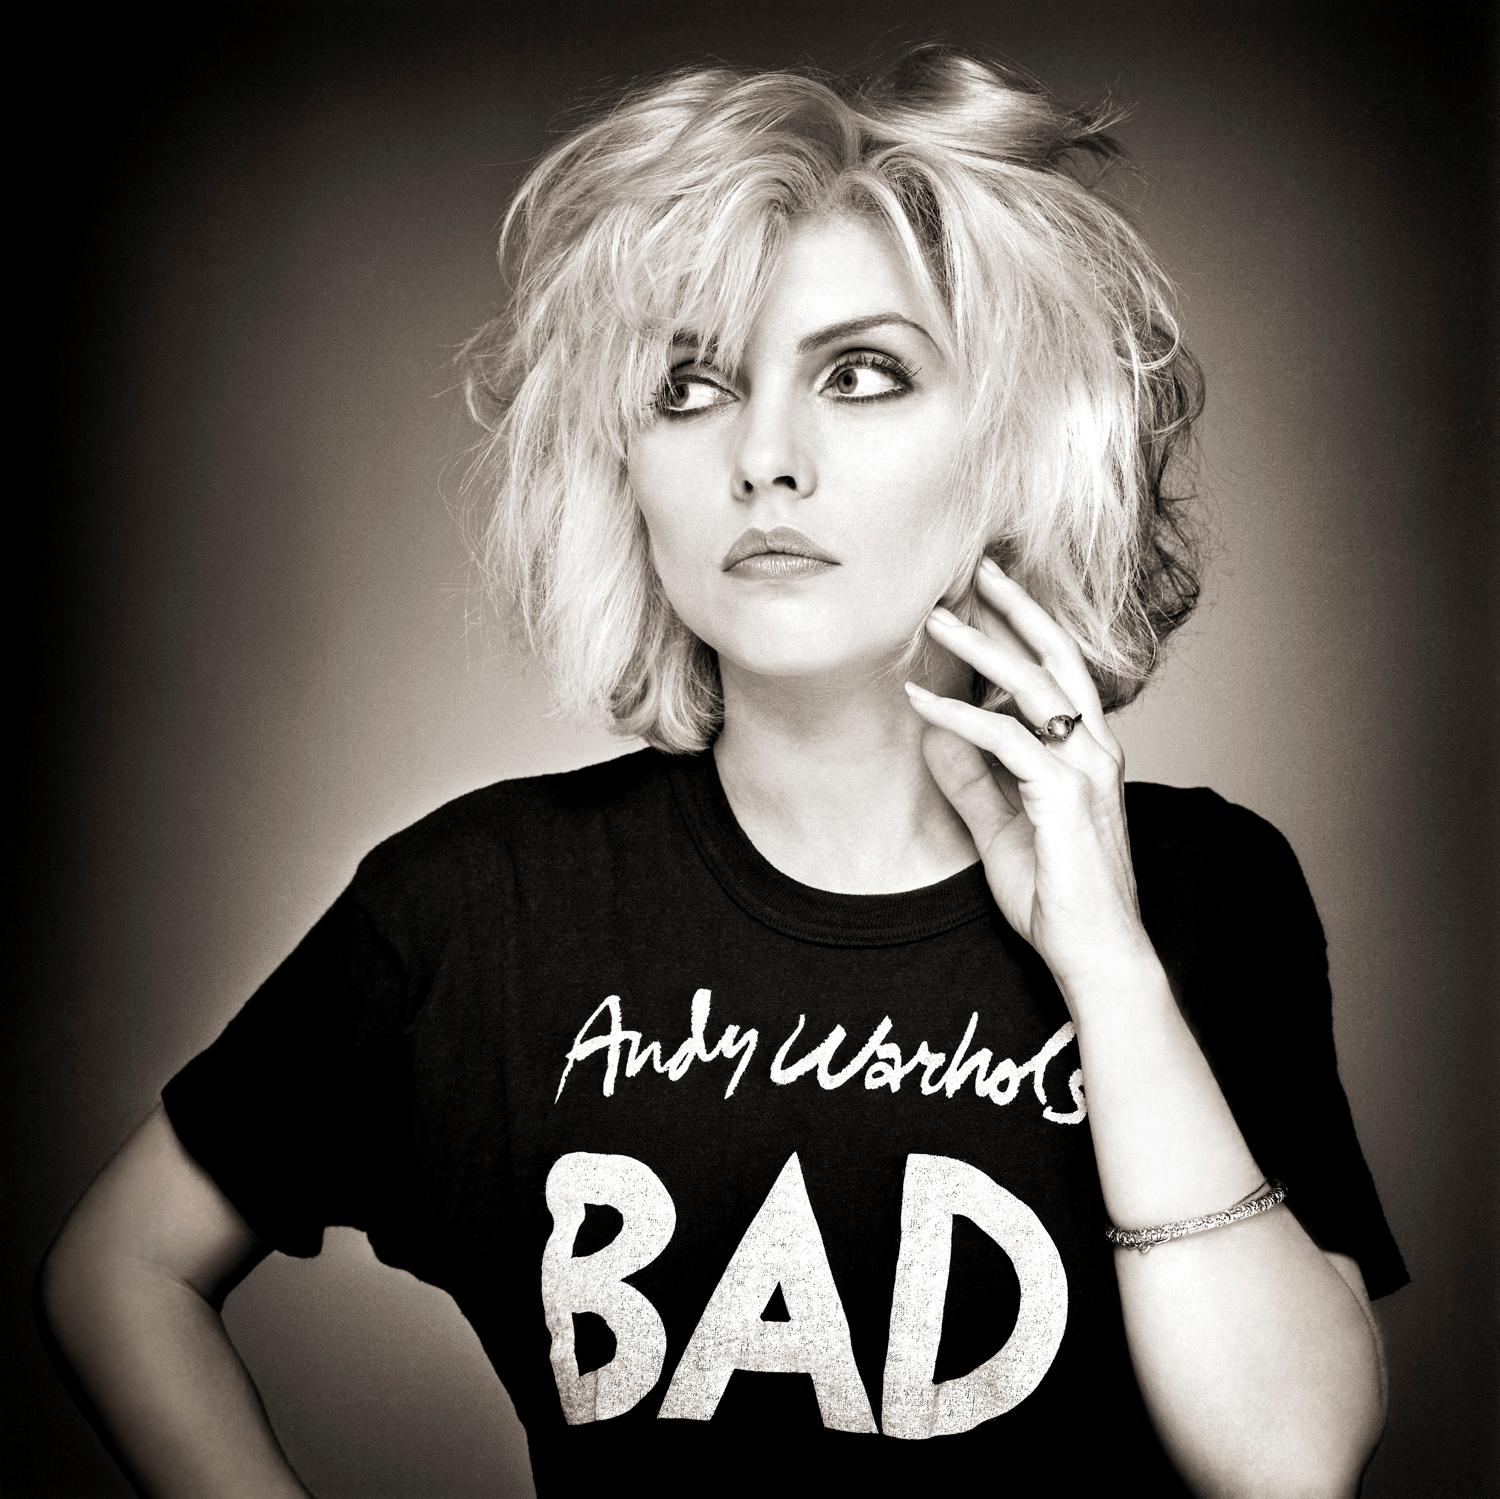 Brian Aris Black and White Photograph - Debbie Harry "Andy Warhols Bad" Blondie